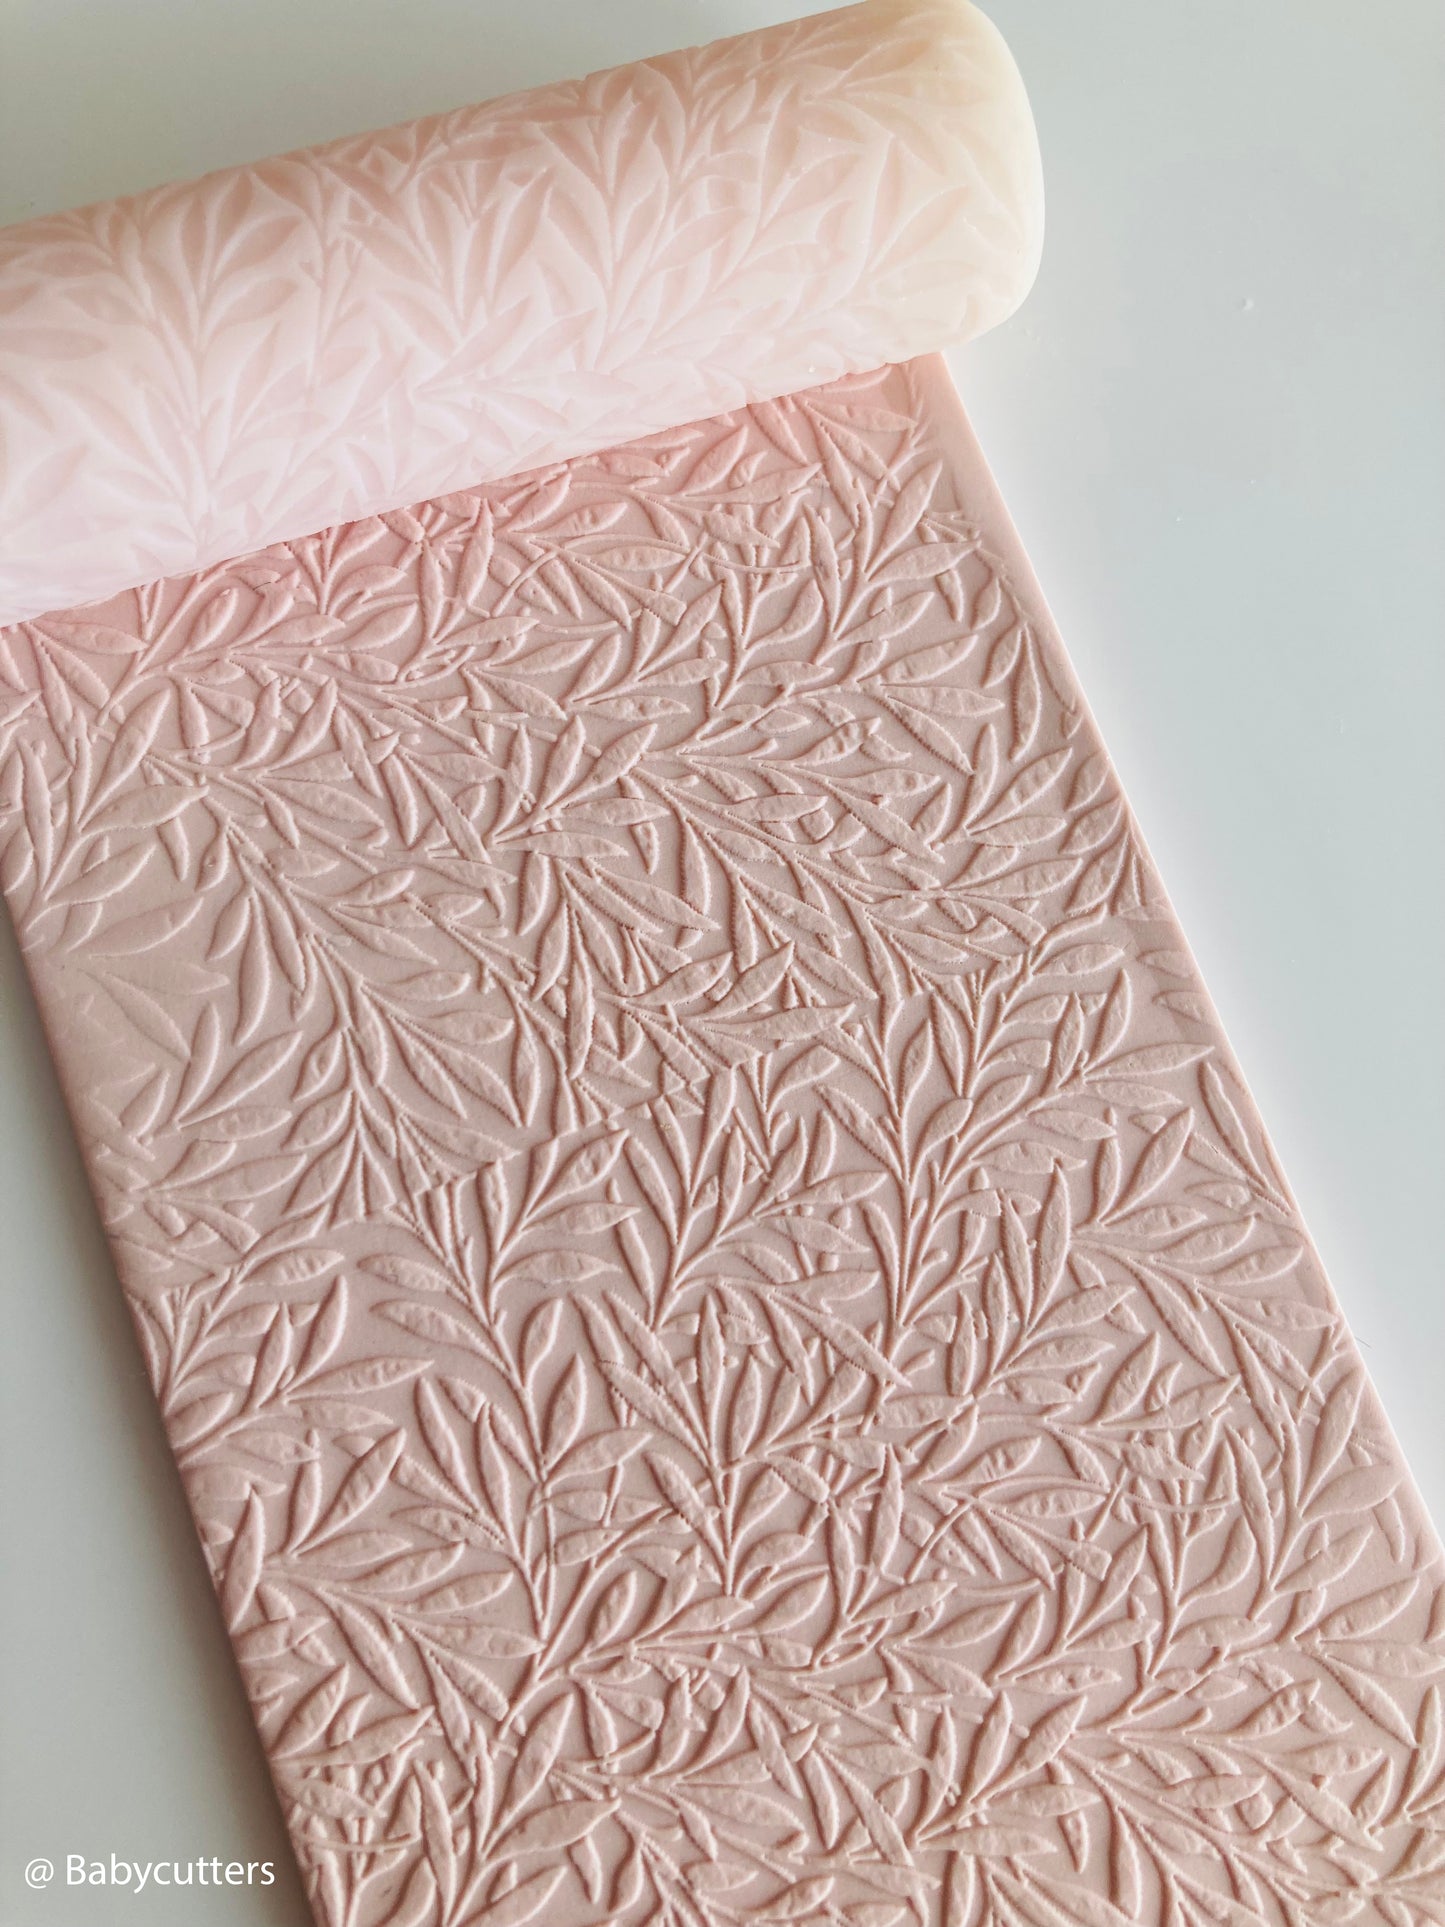 Flourished Vine Leaf - Texture Roller Polymer Clay Stamps